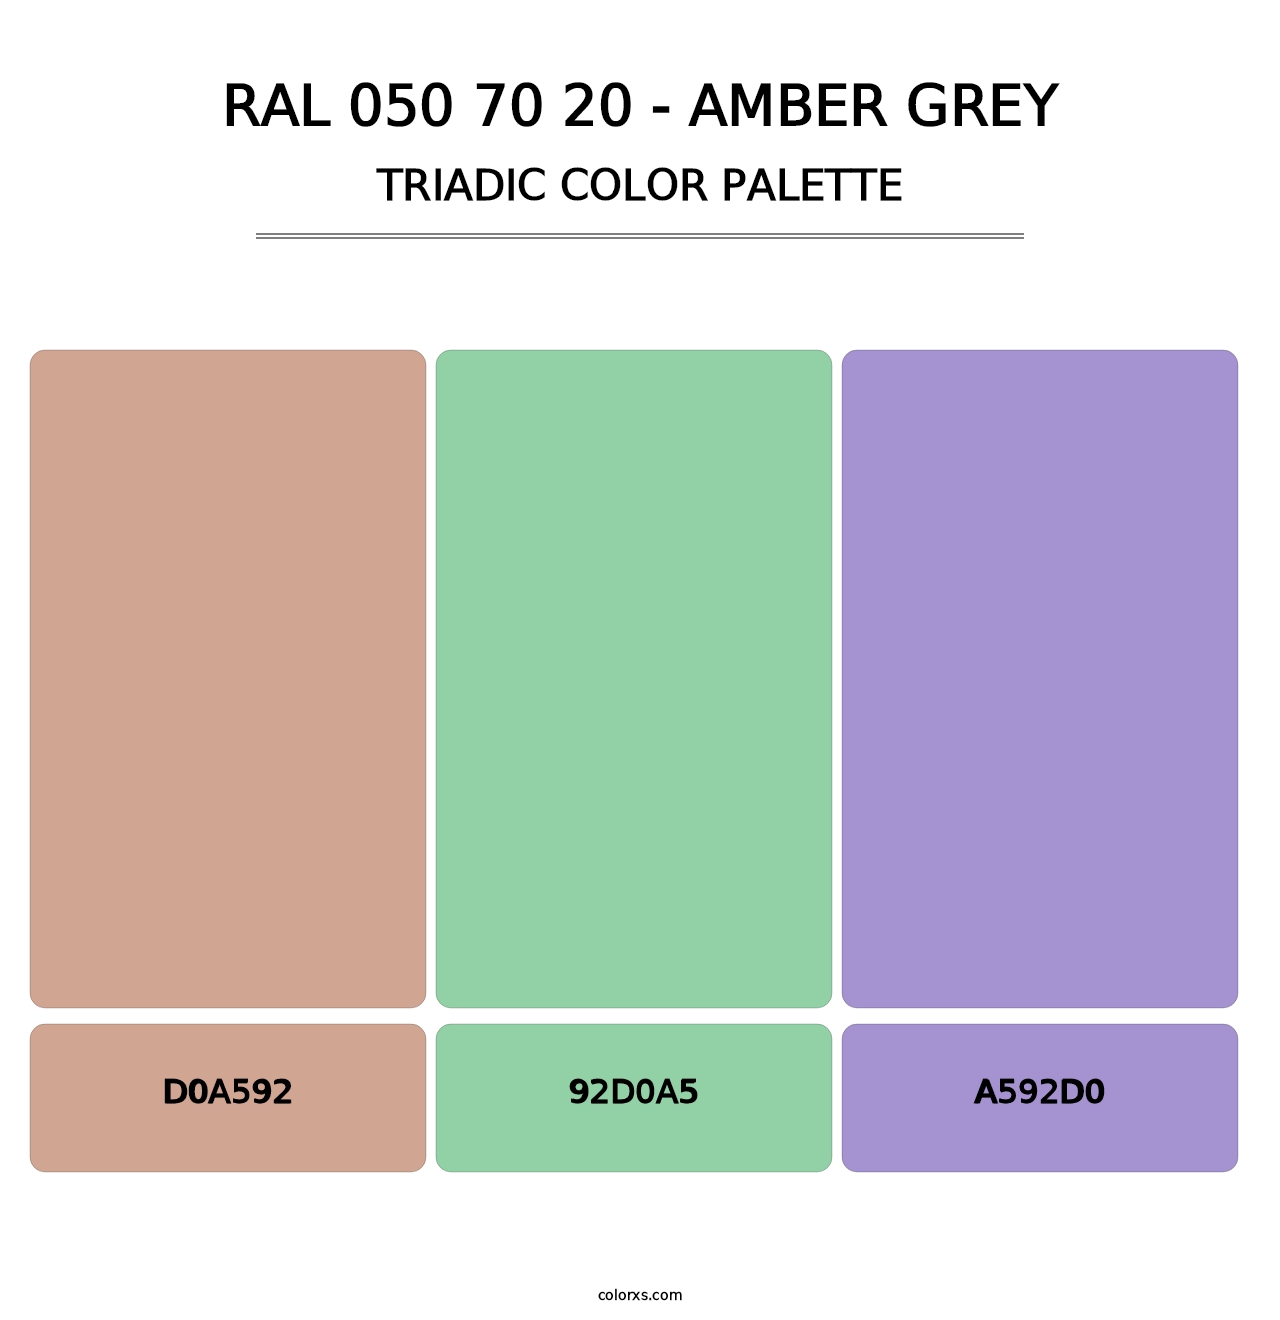 RAL 050 70 20 - Amber Grey - Triadic Color Palette